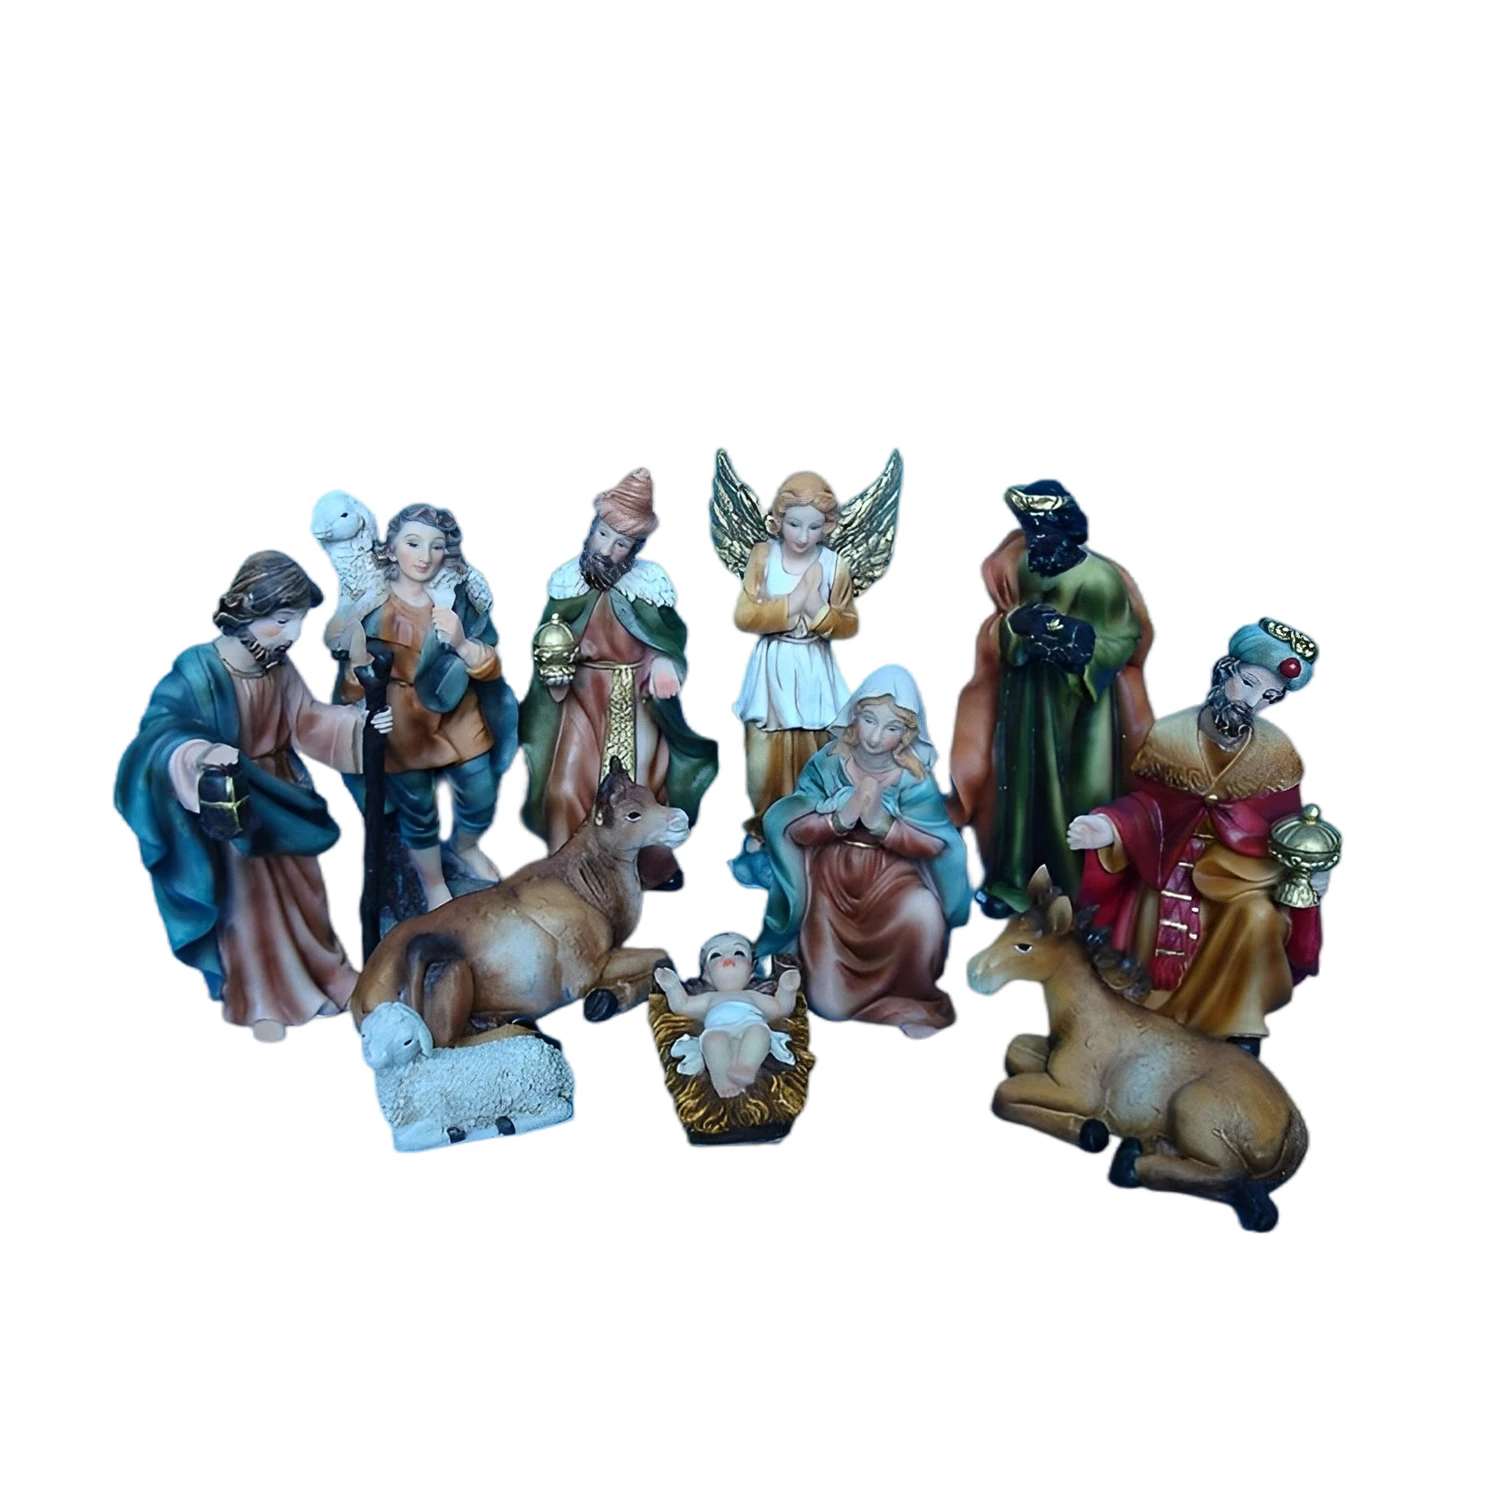 Large Life Size Christmas Figurines Outdoor 100cm Big Size Nativity ...